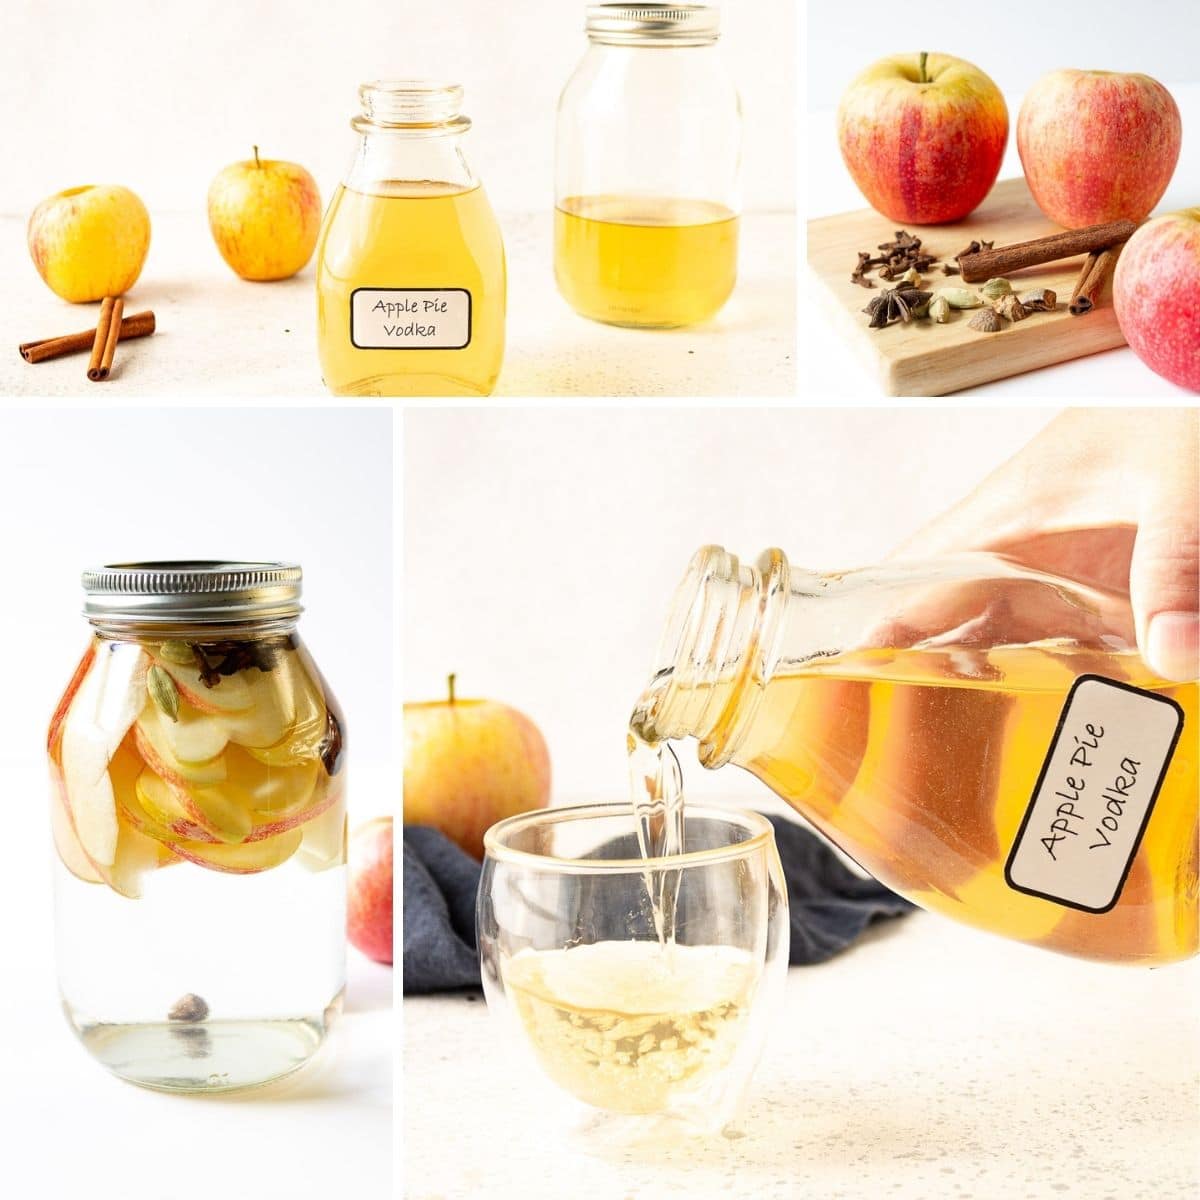 how to make apple pie vodka collage